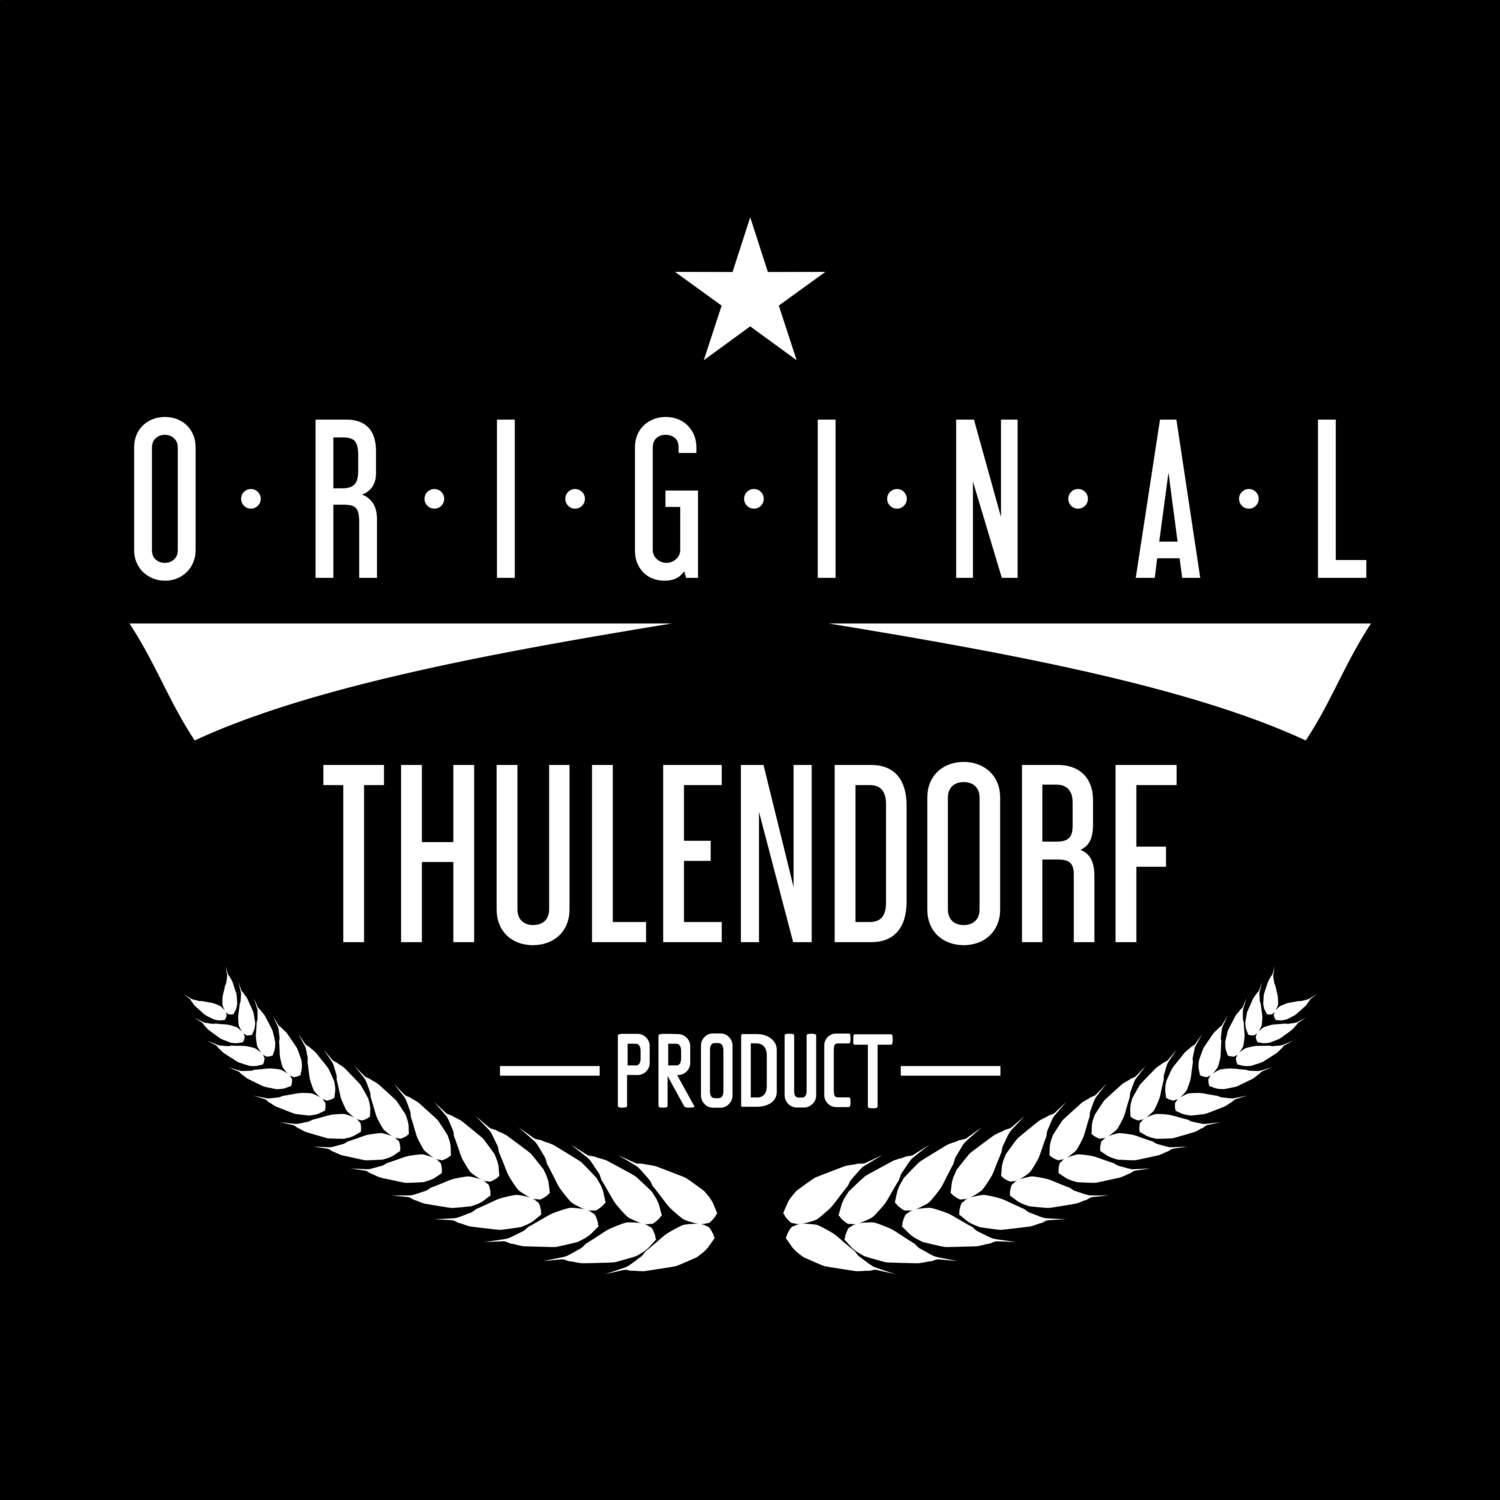 Thulendorf T-Shirt »Original Product«